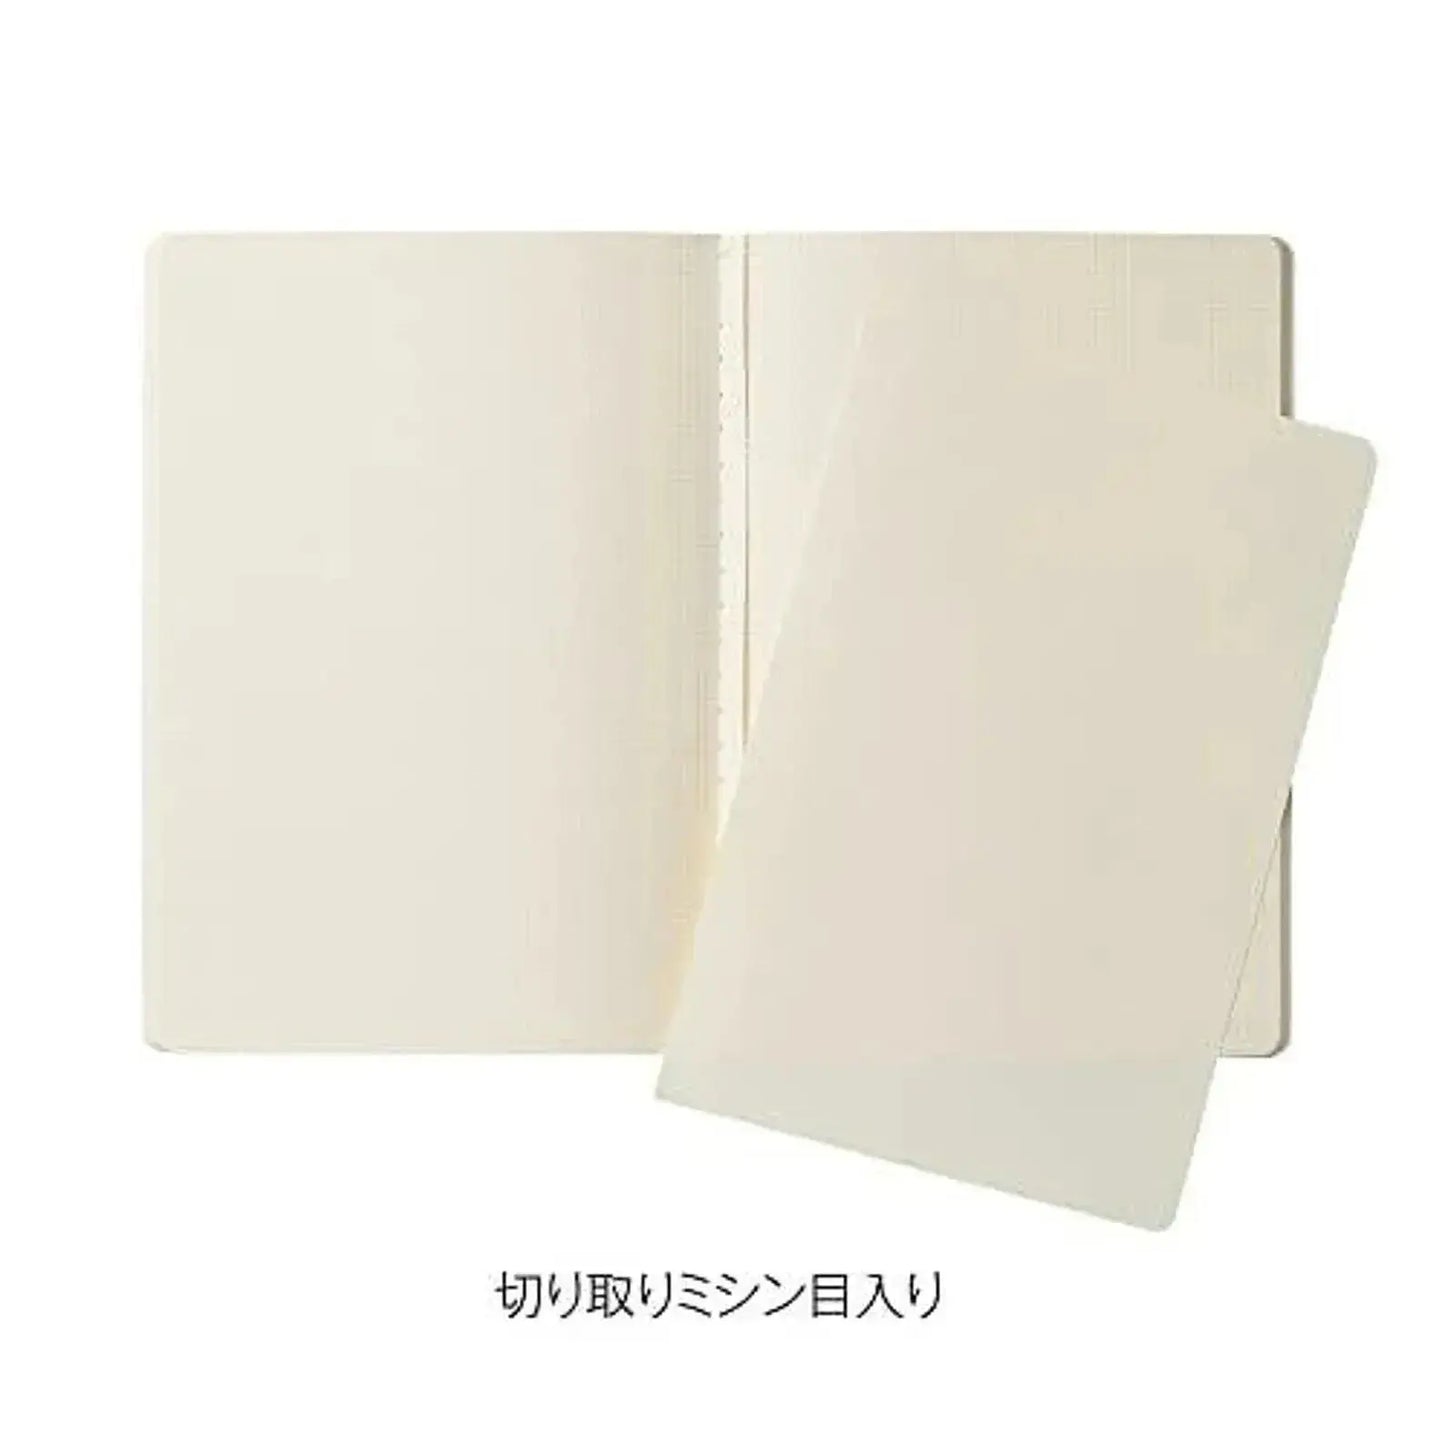 Kleid B6 TINY GRID Notes OK Fools Paper Notebook (Pink)